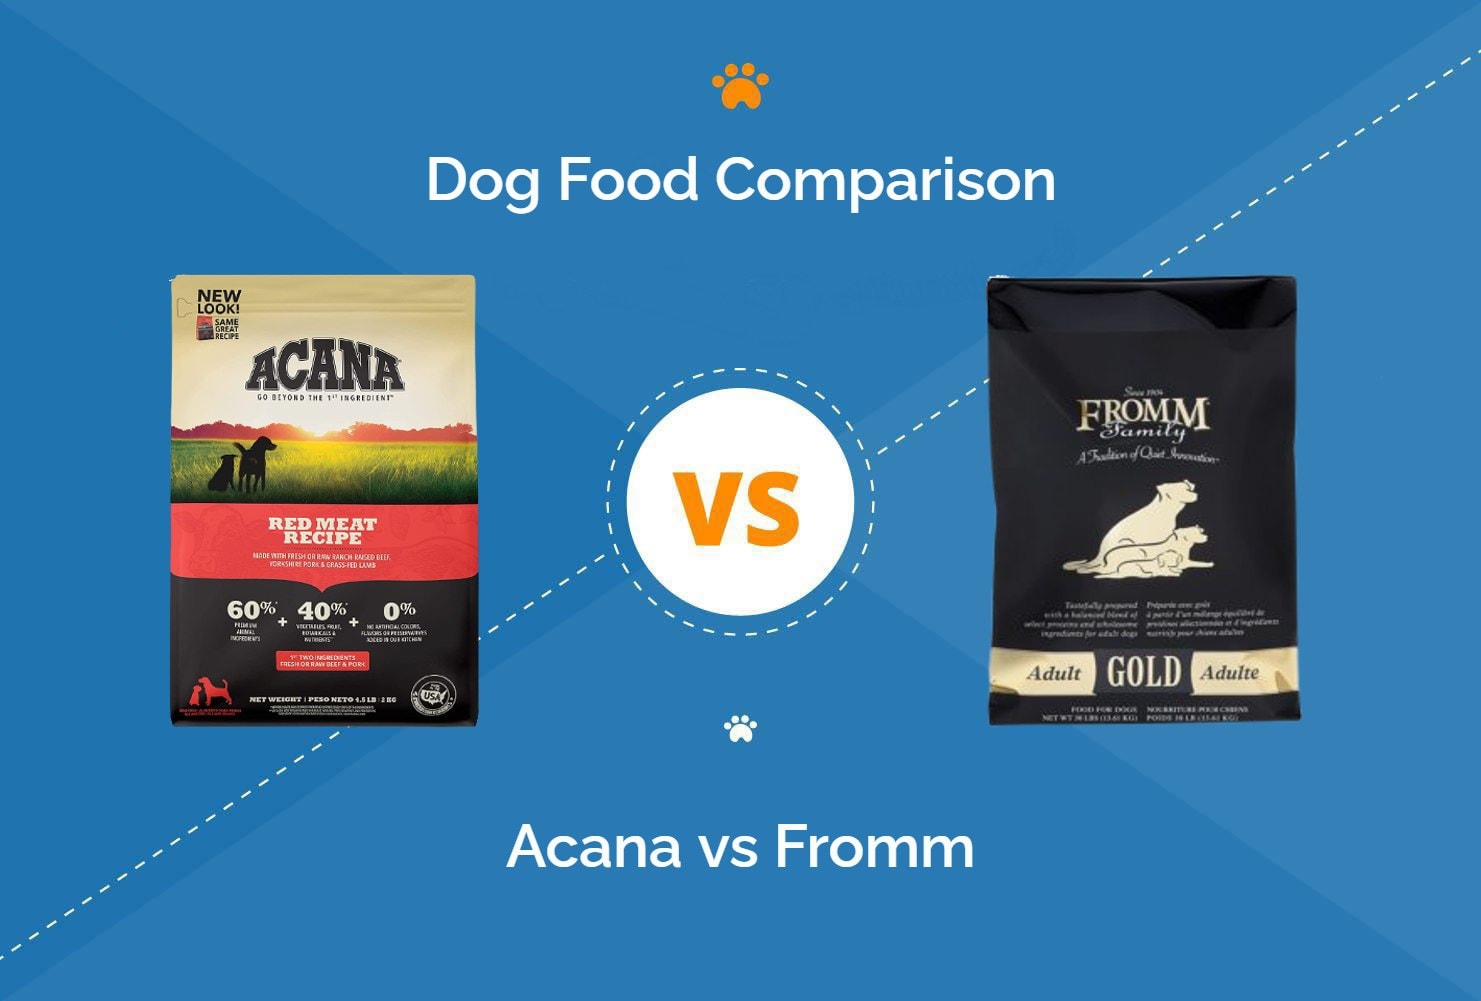 Acana vs Fromm Dog Food